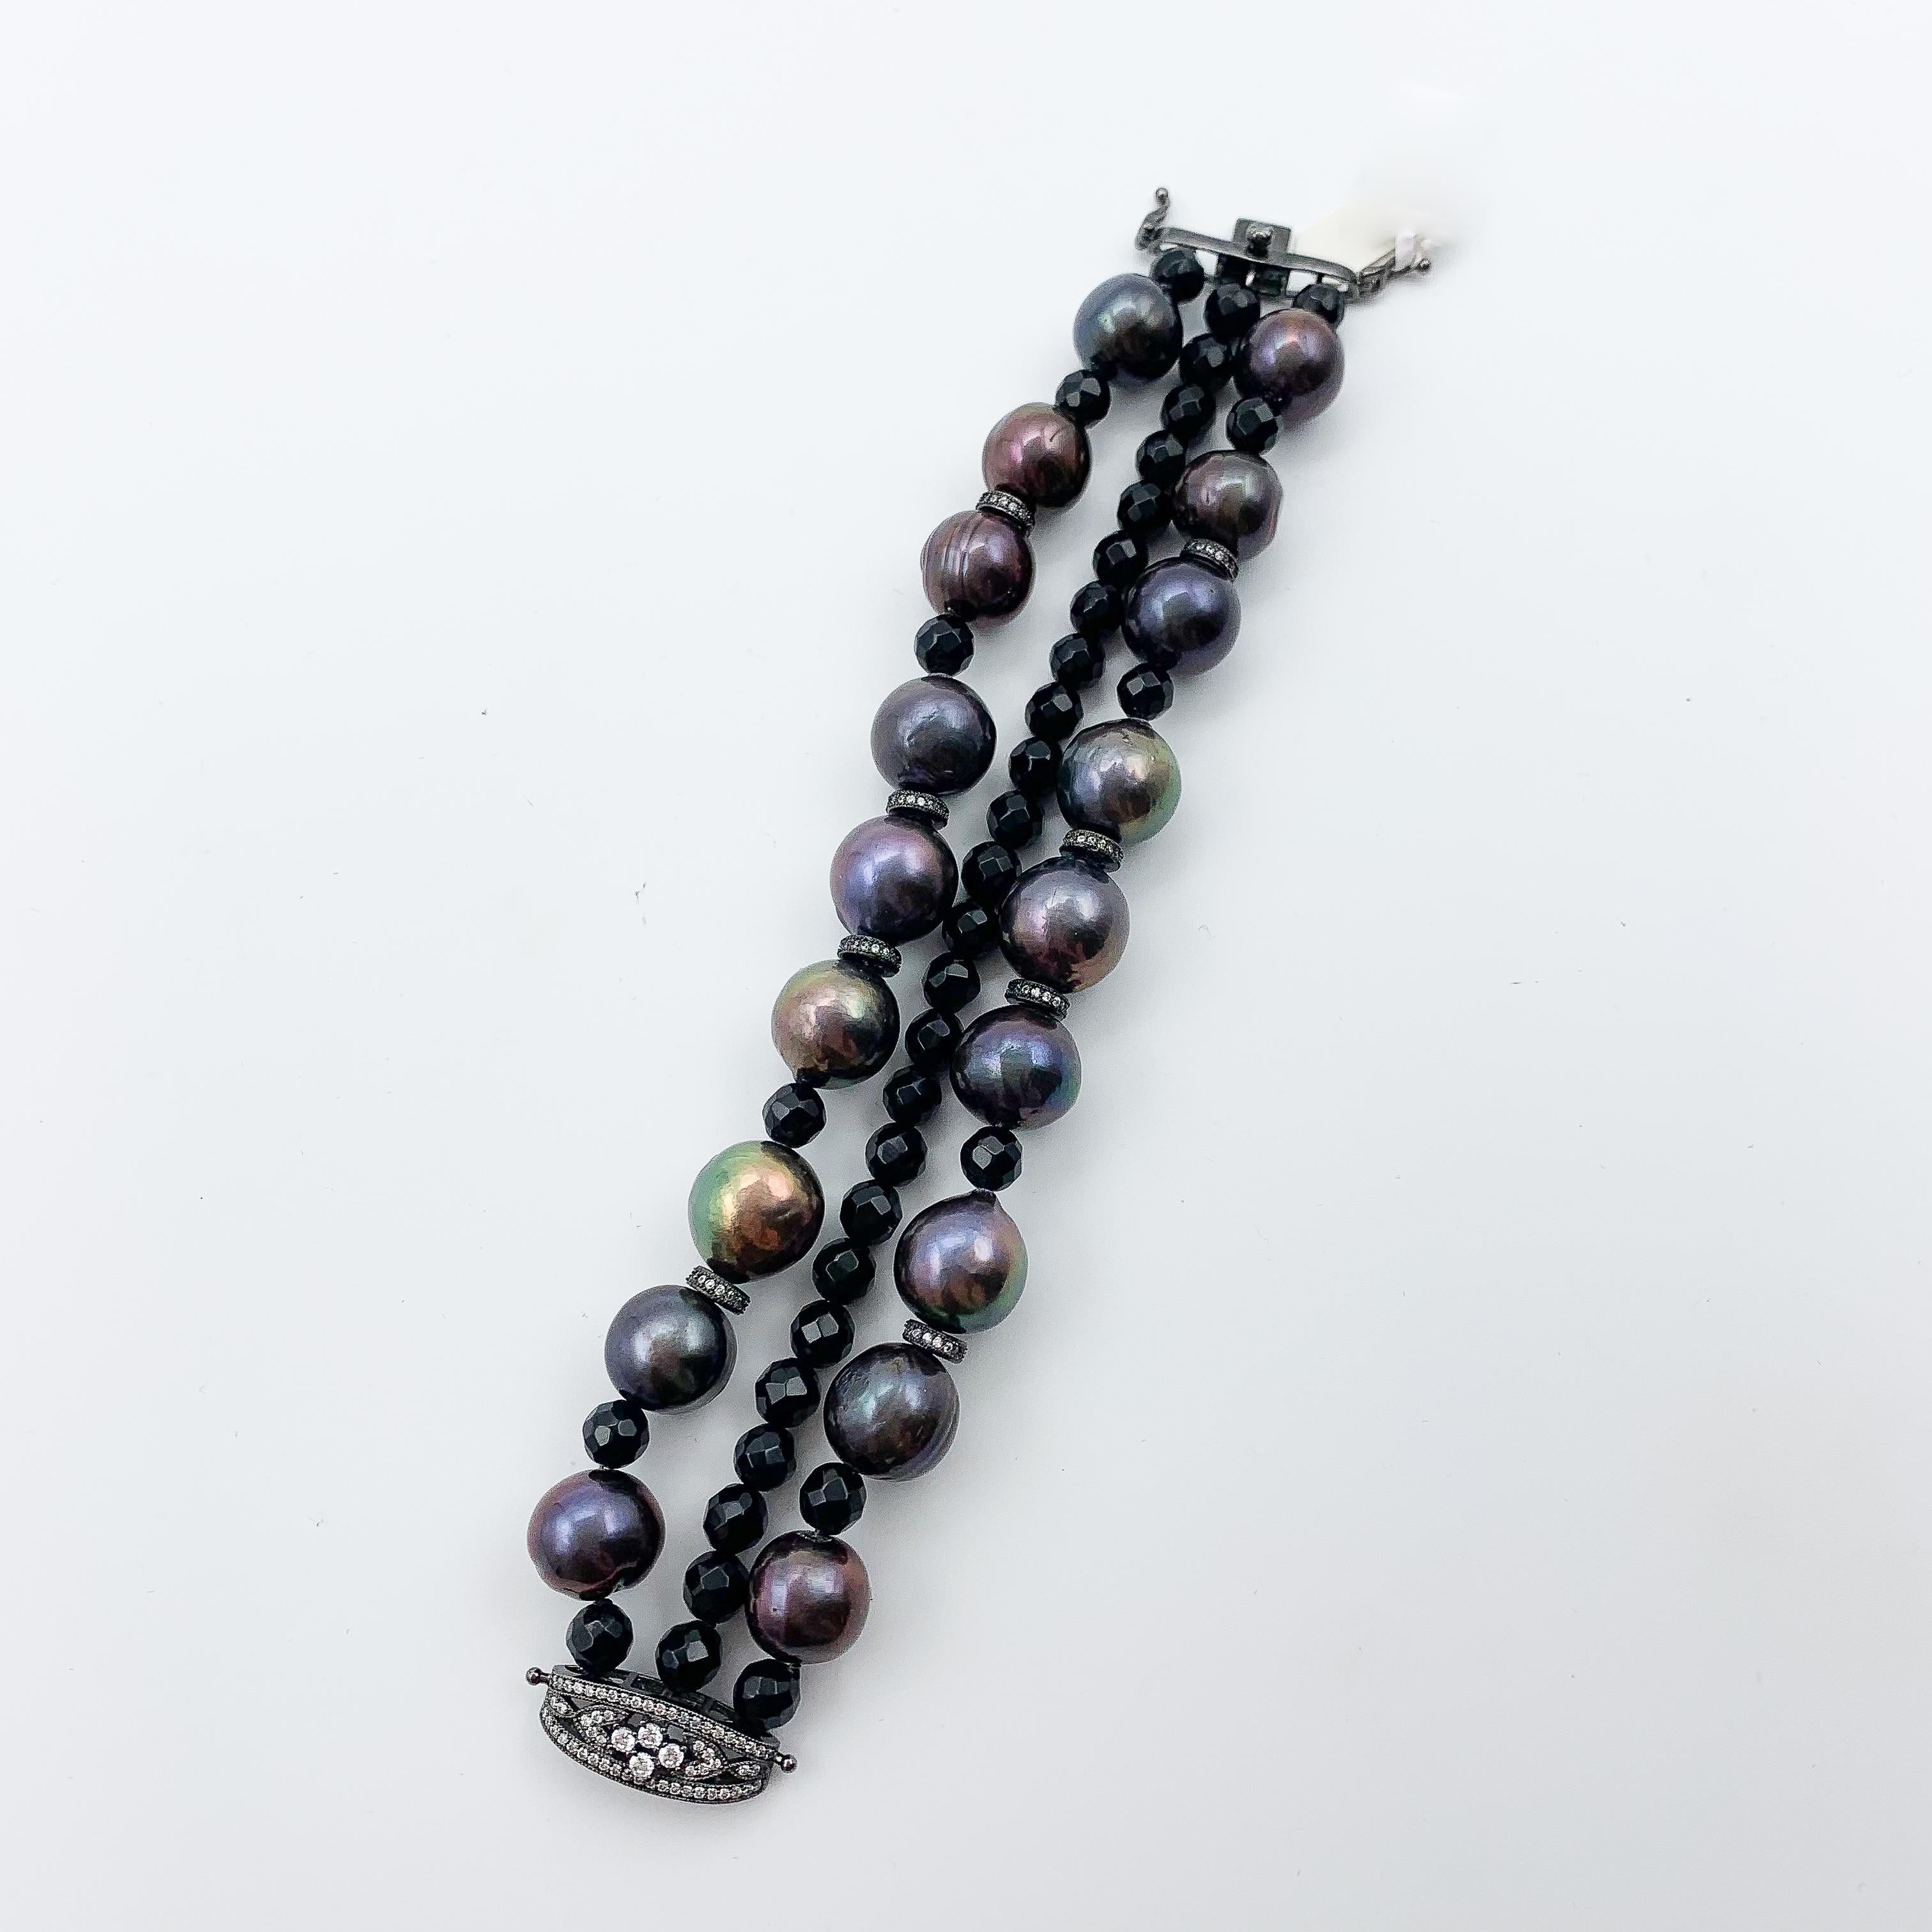 -Sterling cz 
-Bk-rhodium black onyx beads 
-12-13mm bk pearls
- Open box clasp 
-7in length